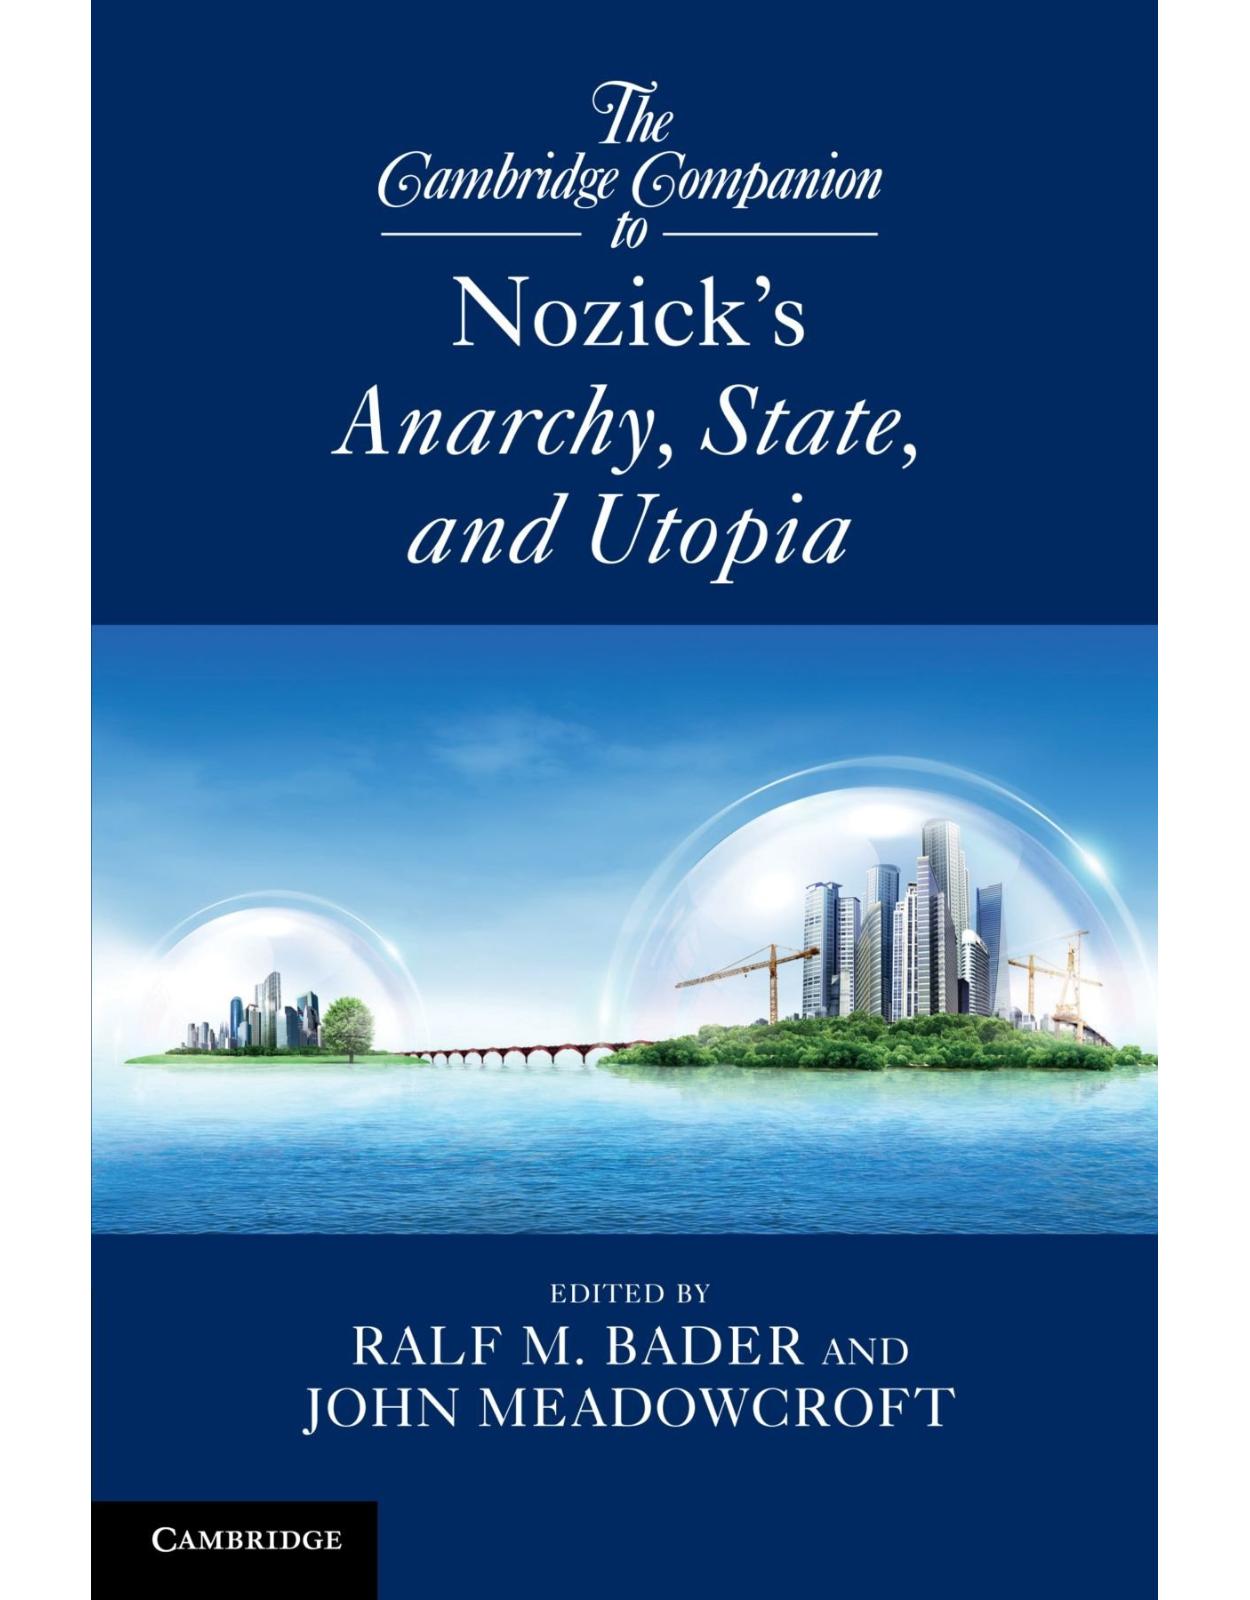 The Cambridge Companion to Nozick's Anarchy, State, and Utopia (Cambridge Companions to Philosophy)